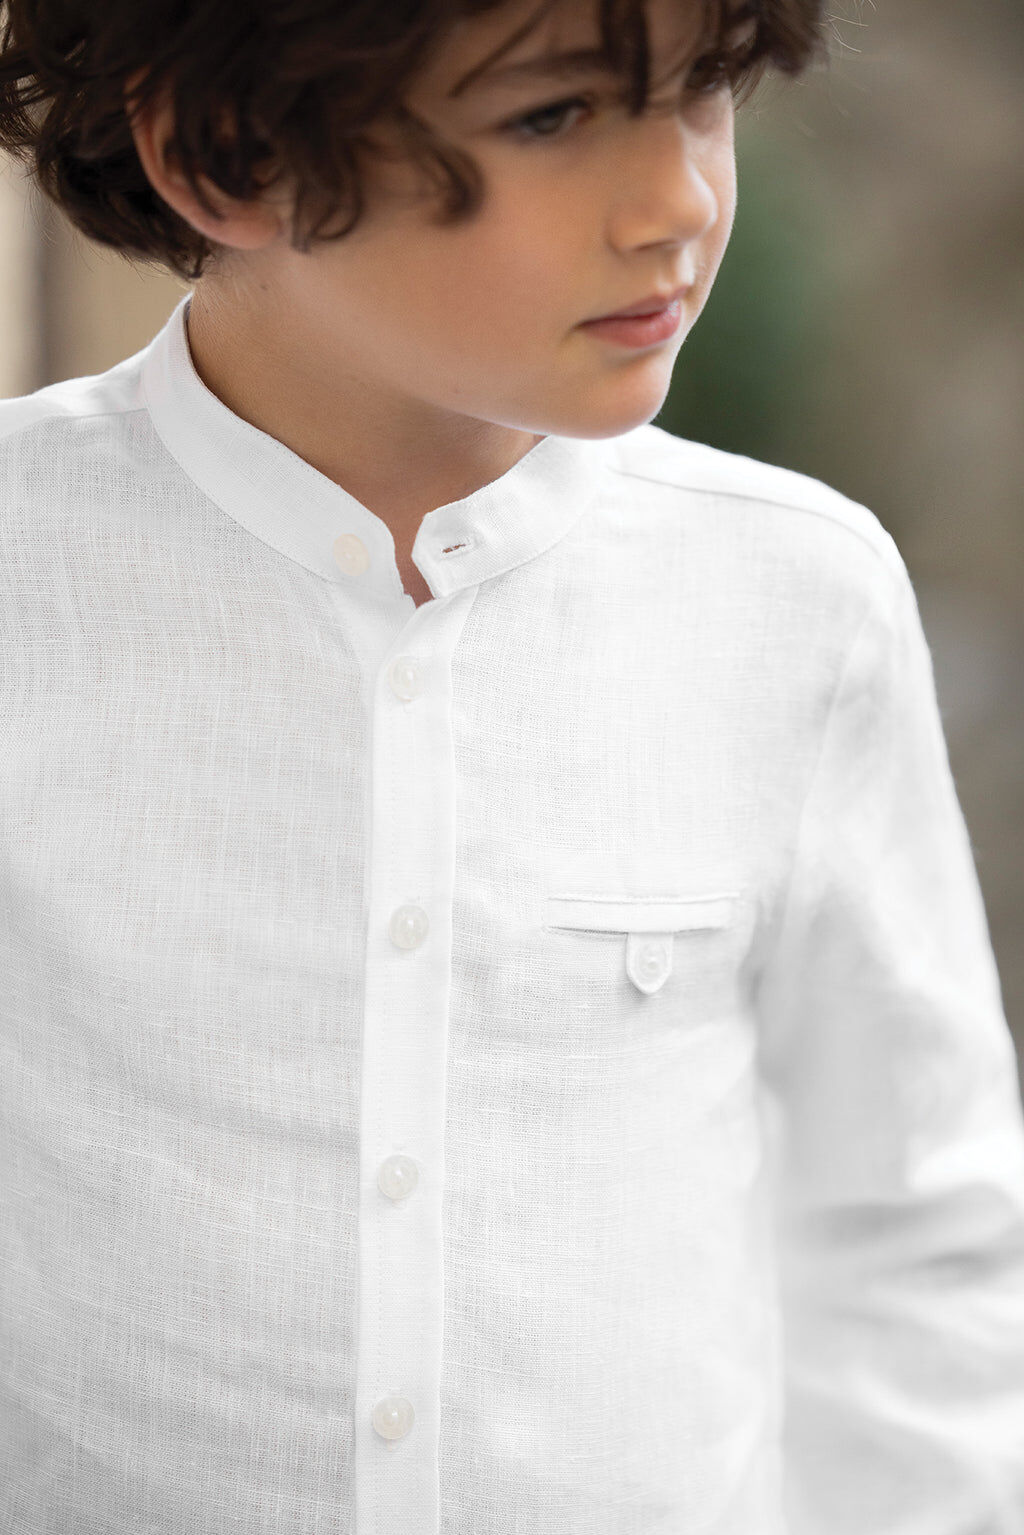 Shirt - White Linen Mao collar